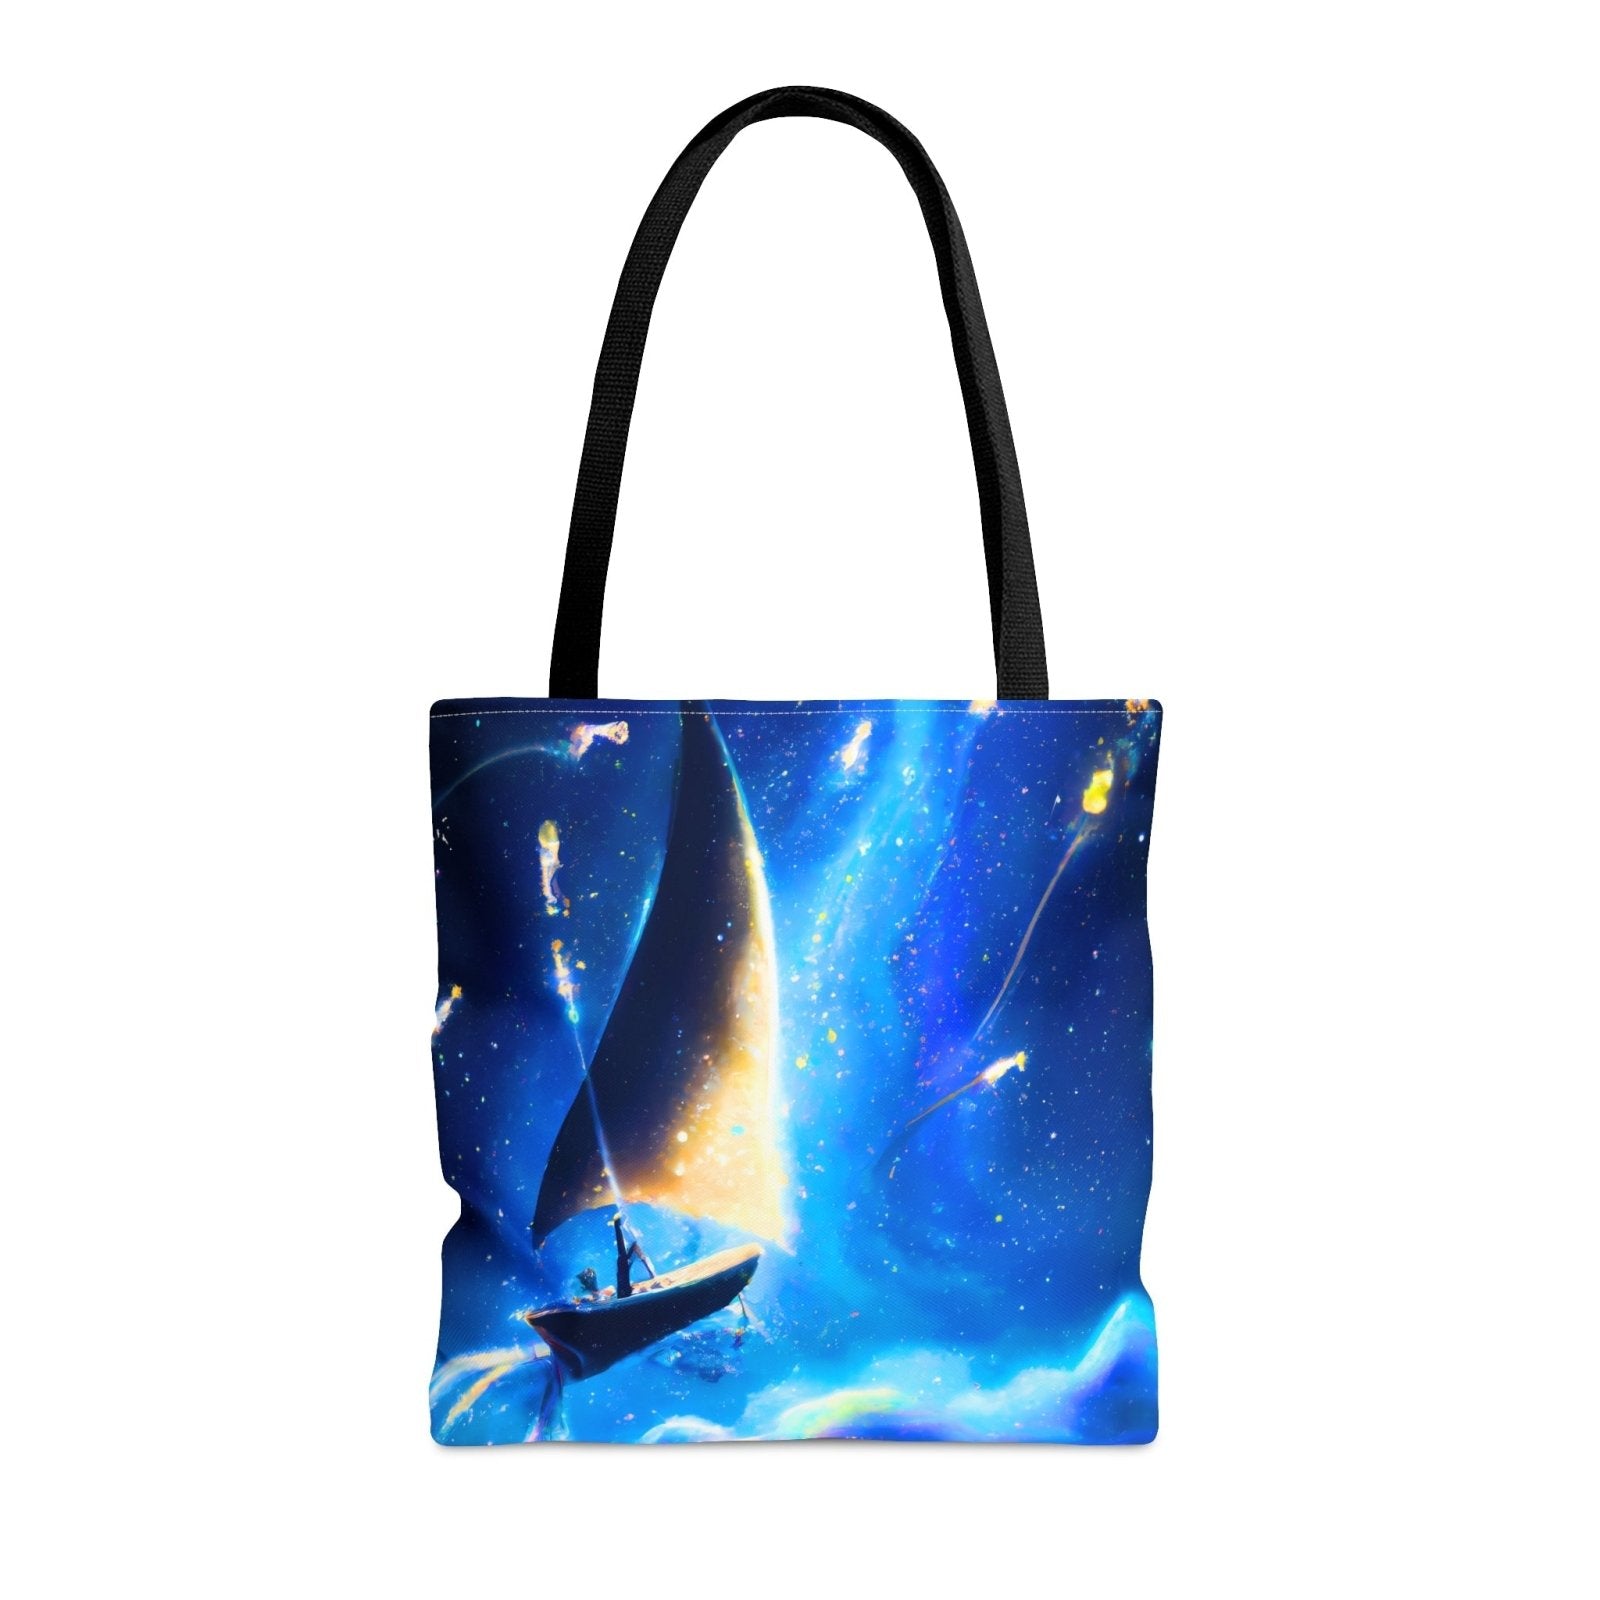 Firefly Sails Tote Bag, sailing accessories, nautical design, liveaboard fashion, cruising bag - Subtle Blue M